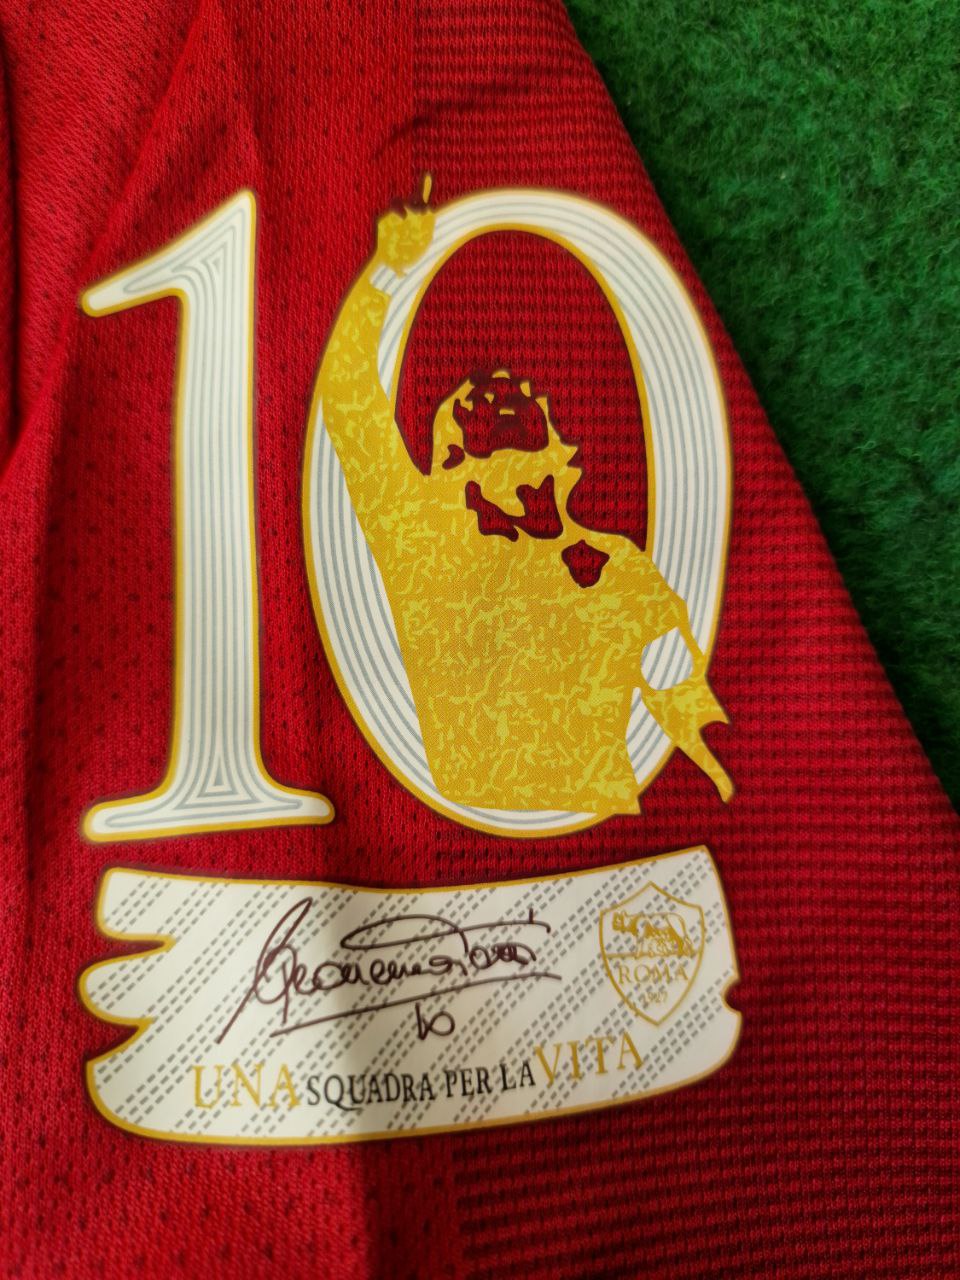 Totti Roma Nova Camisa Special Edition-Trikot